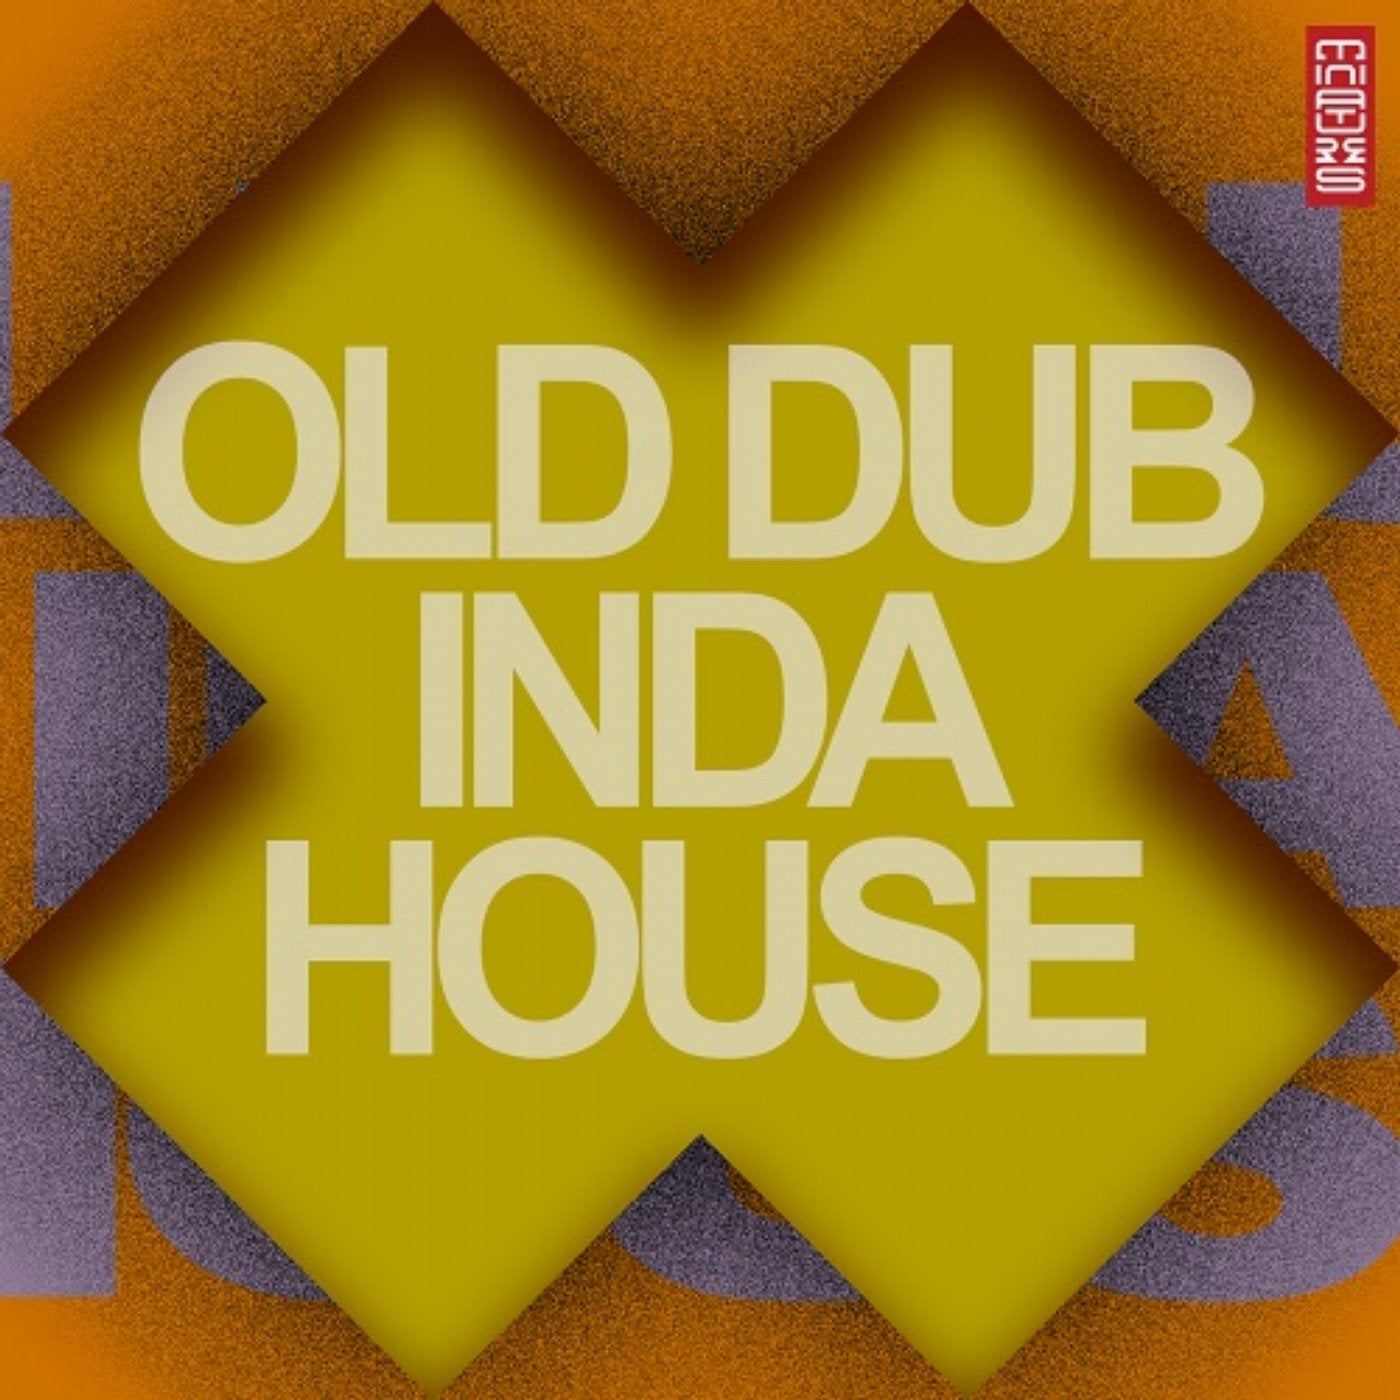 Old Dub Inda House